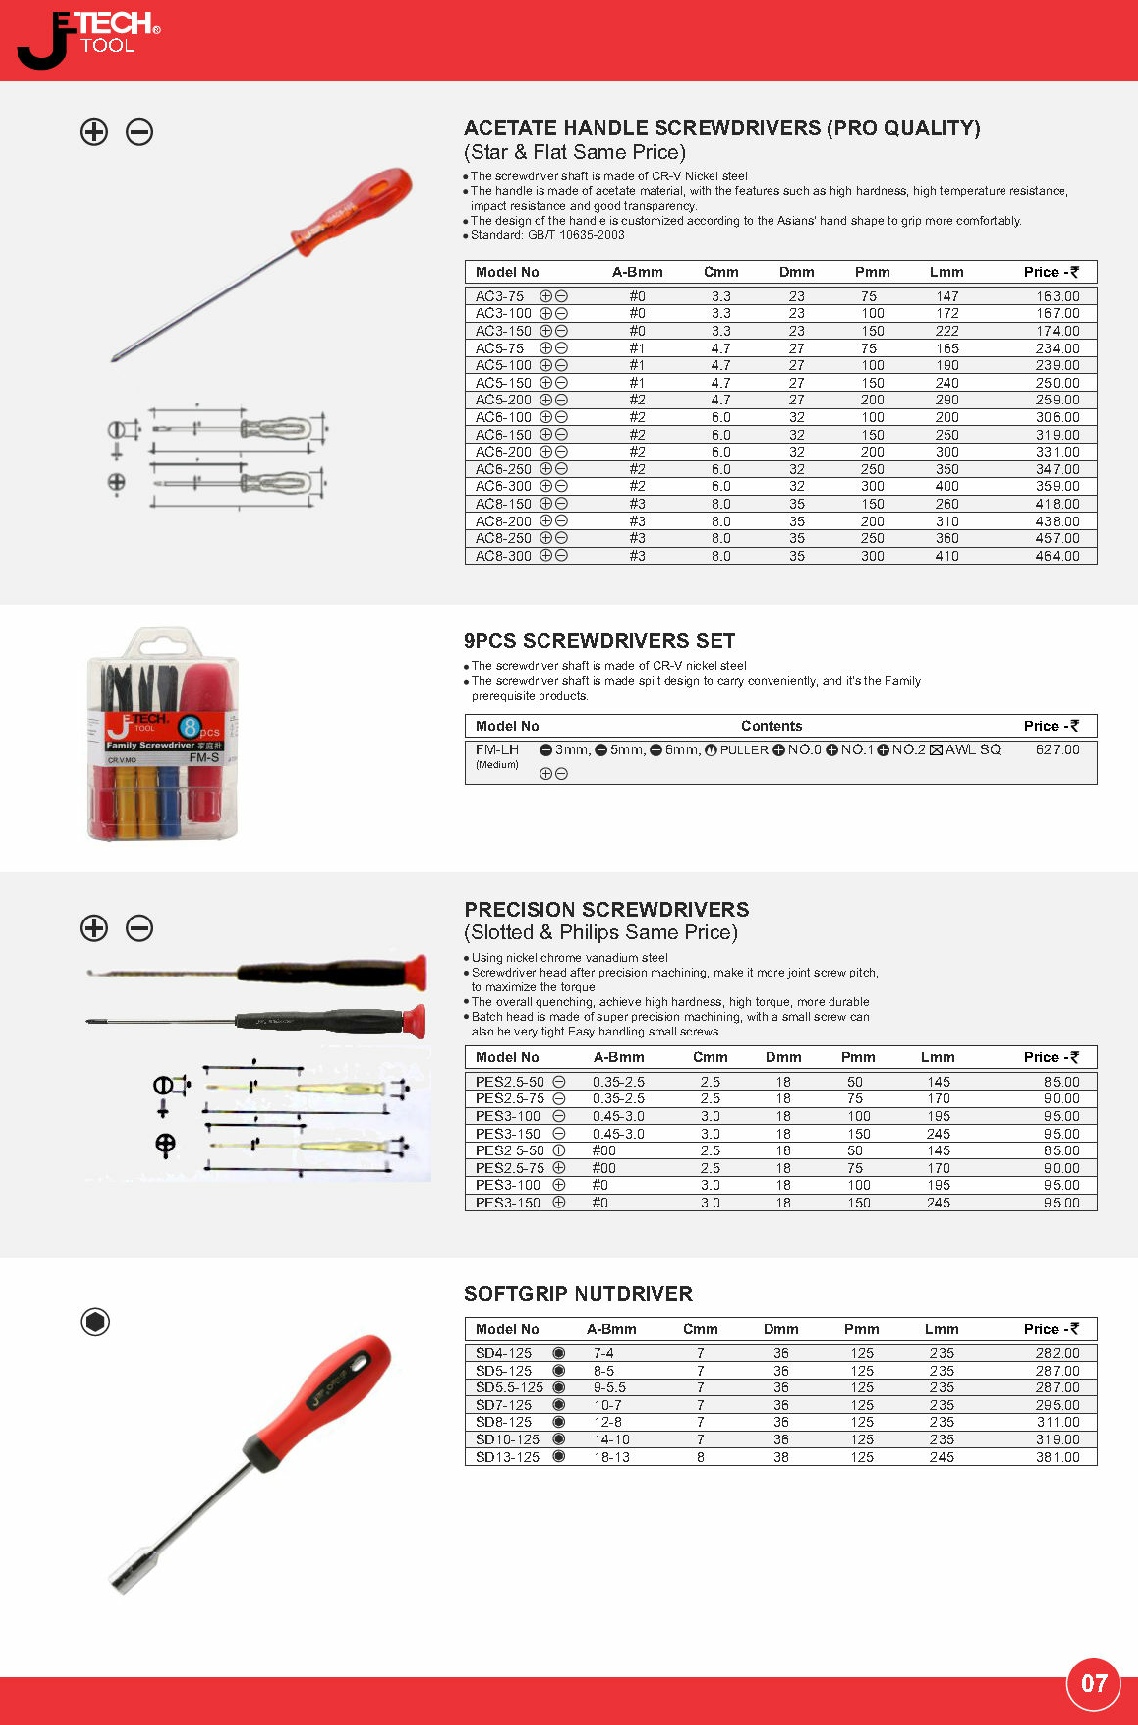 Jetech toolkits Chennai,acetate handle screw driver,softgrip nut drivers, precision screwdriver, chennai